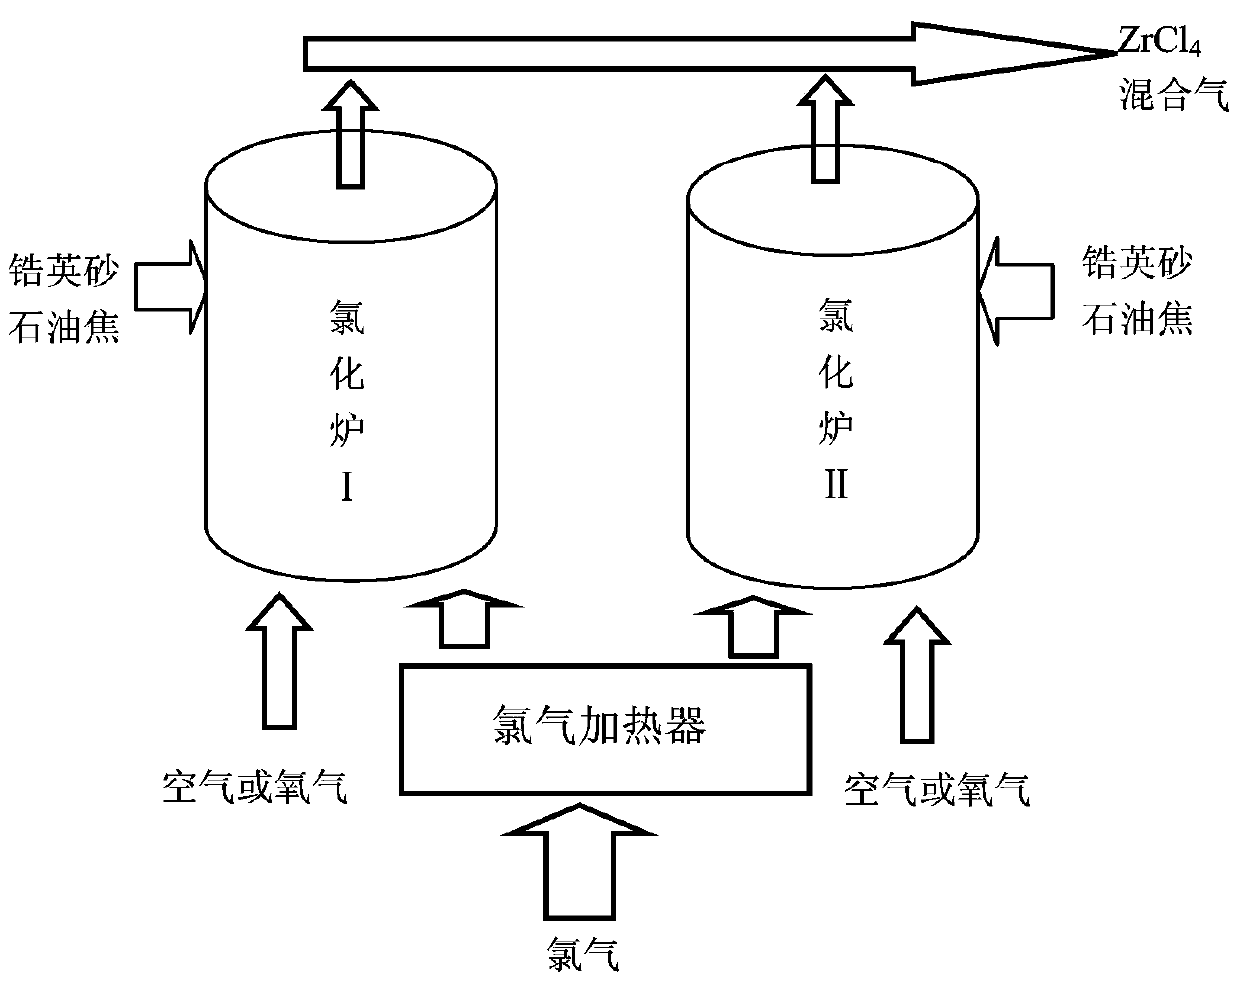 Method for producing zirconium tetrachloride by carbochlorination and method for producing zirconium sponge